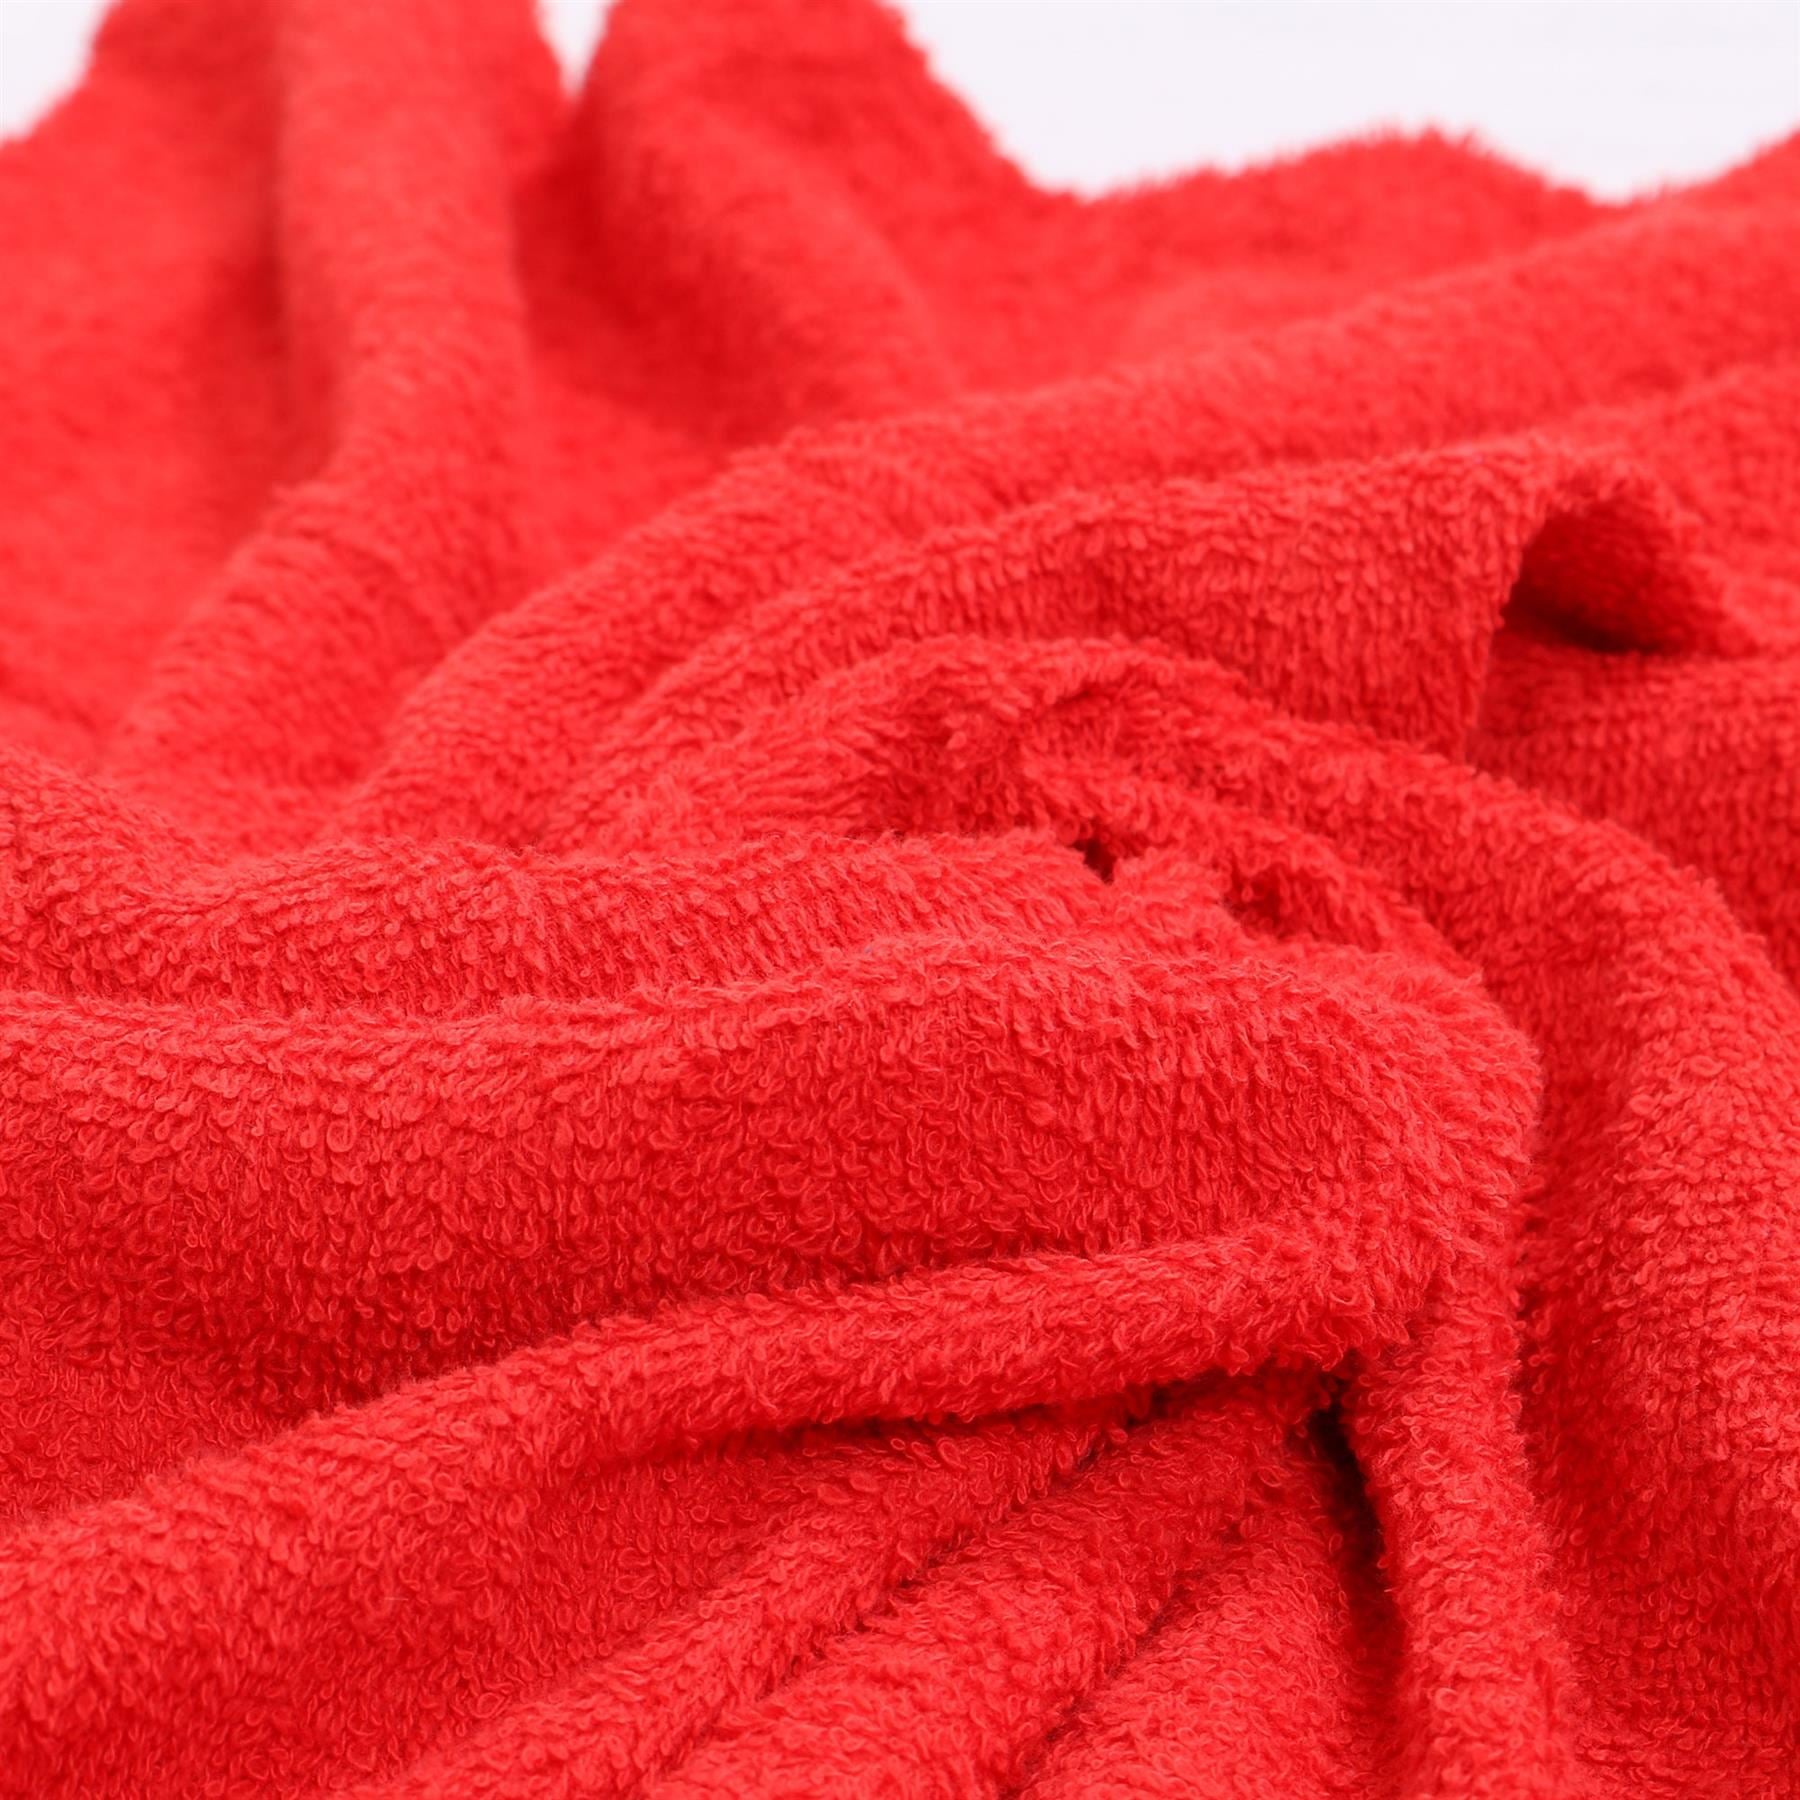 Kids Bathrobe 100% Cotton Red Hooded Bathing Dressing Gown Unisex 2-13 Yrs